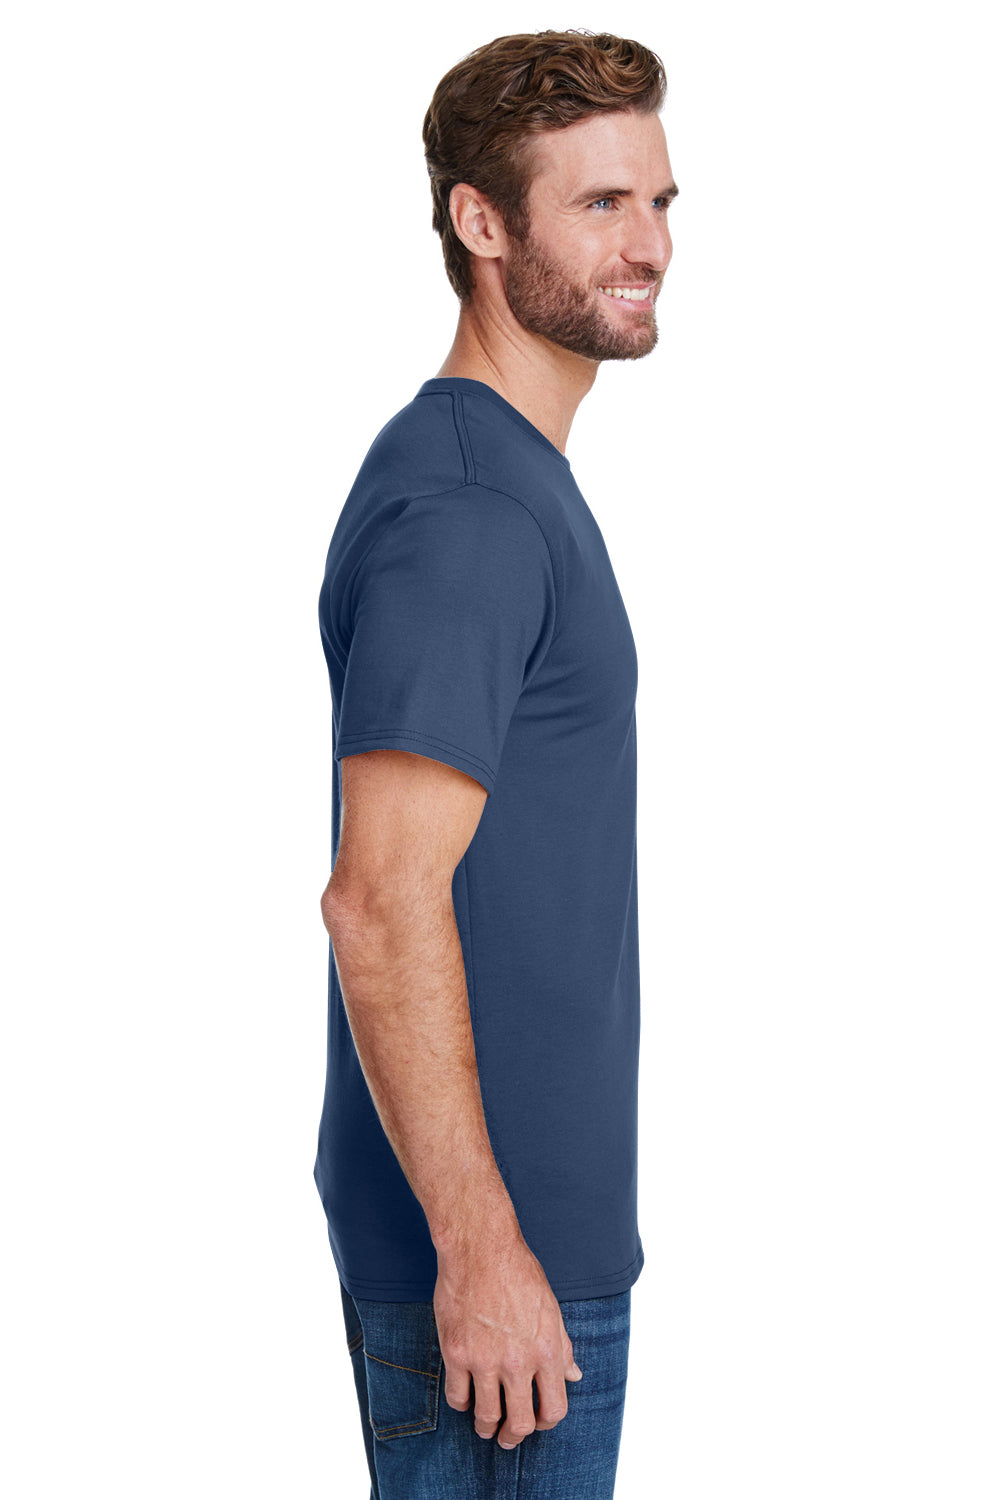 Hanes W110 Mens Workwear Short Sleeve Crewneck T-Shirt w/ Pocket Navy Blue Side